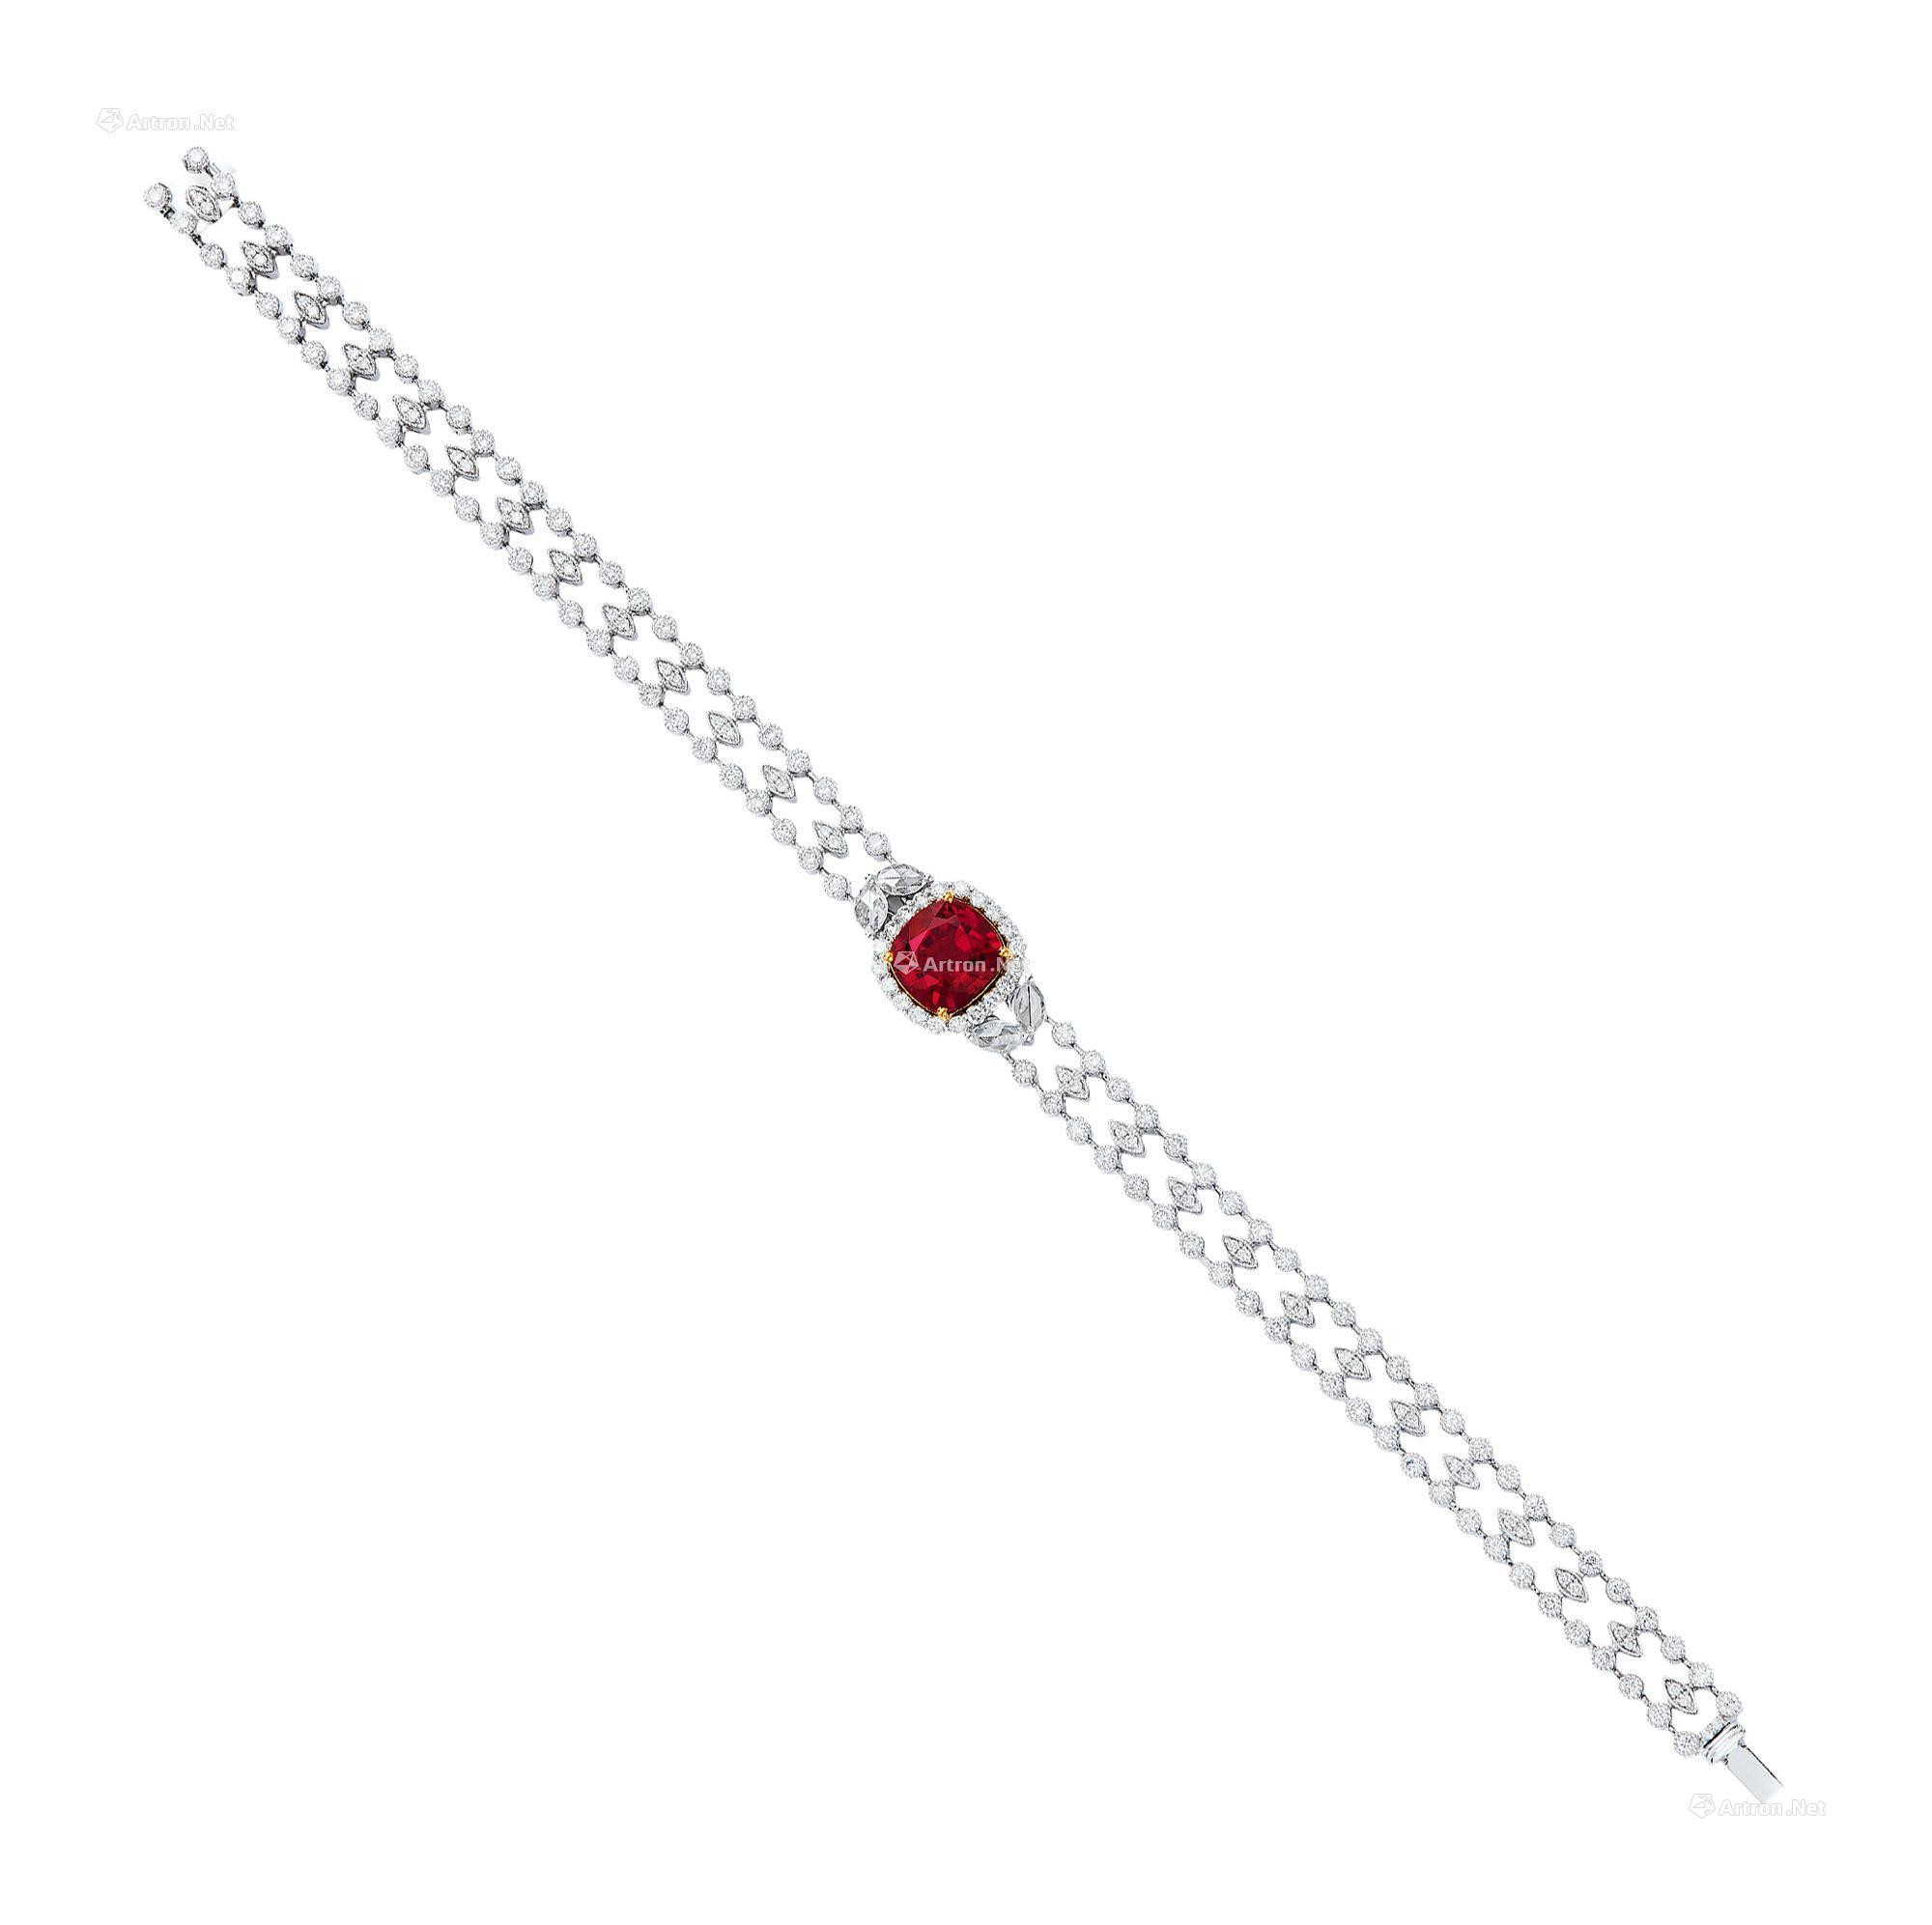 A 2.46 CARAT BURMESE ‘VIVID RED’ SPINEL AND DIAMOND BRACELET